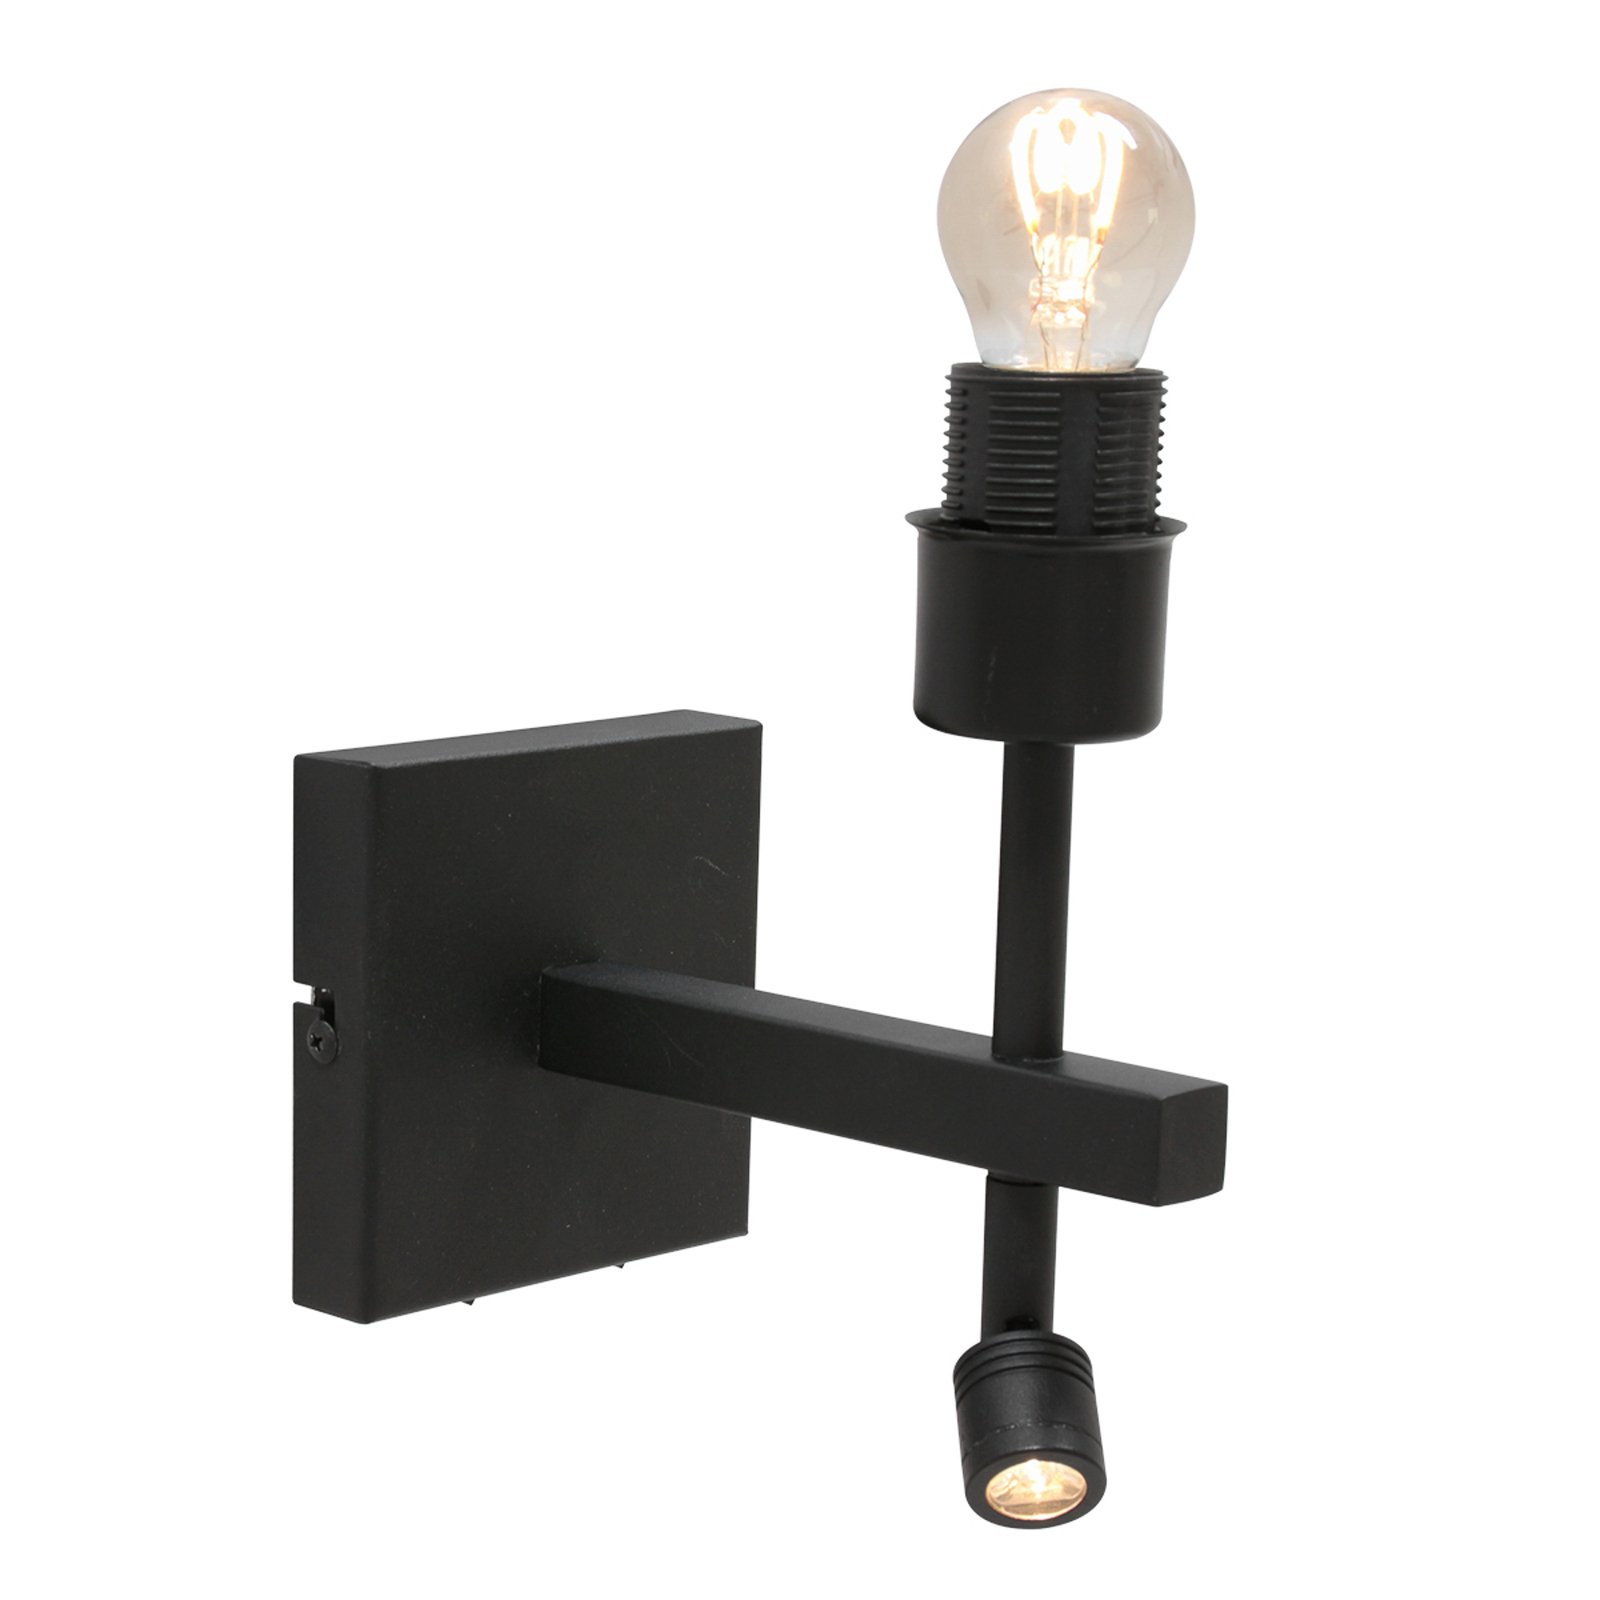 Stang wandlamp, LED leeslampje, vlechtwerk naturel/zwart